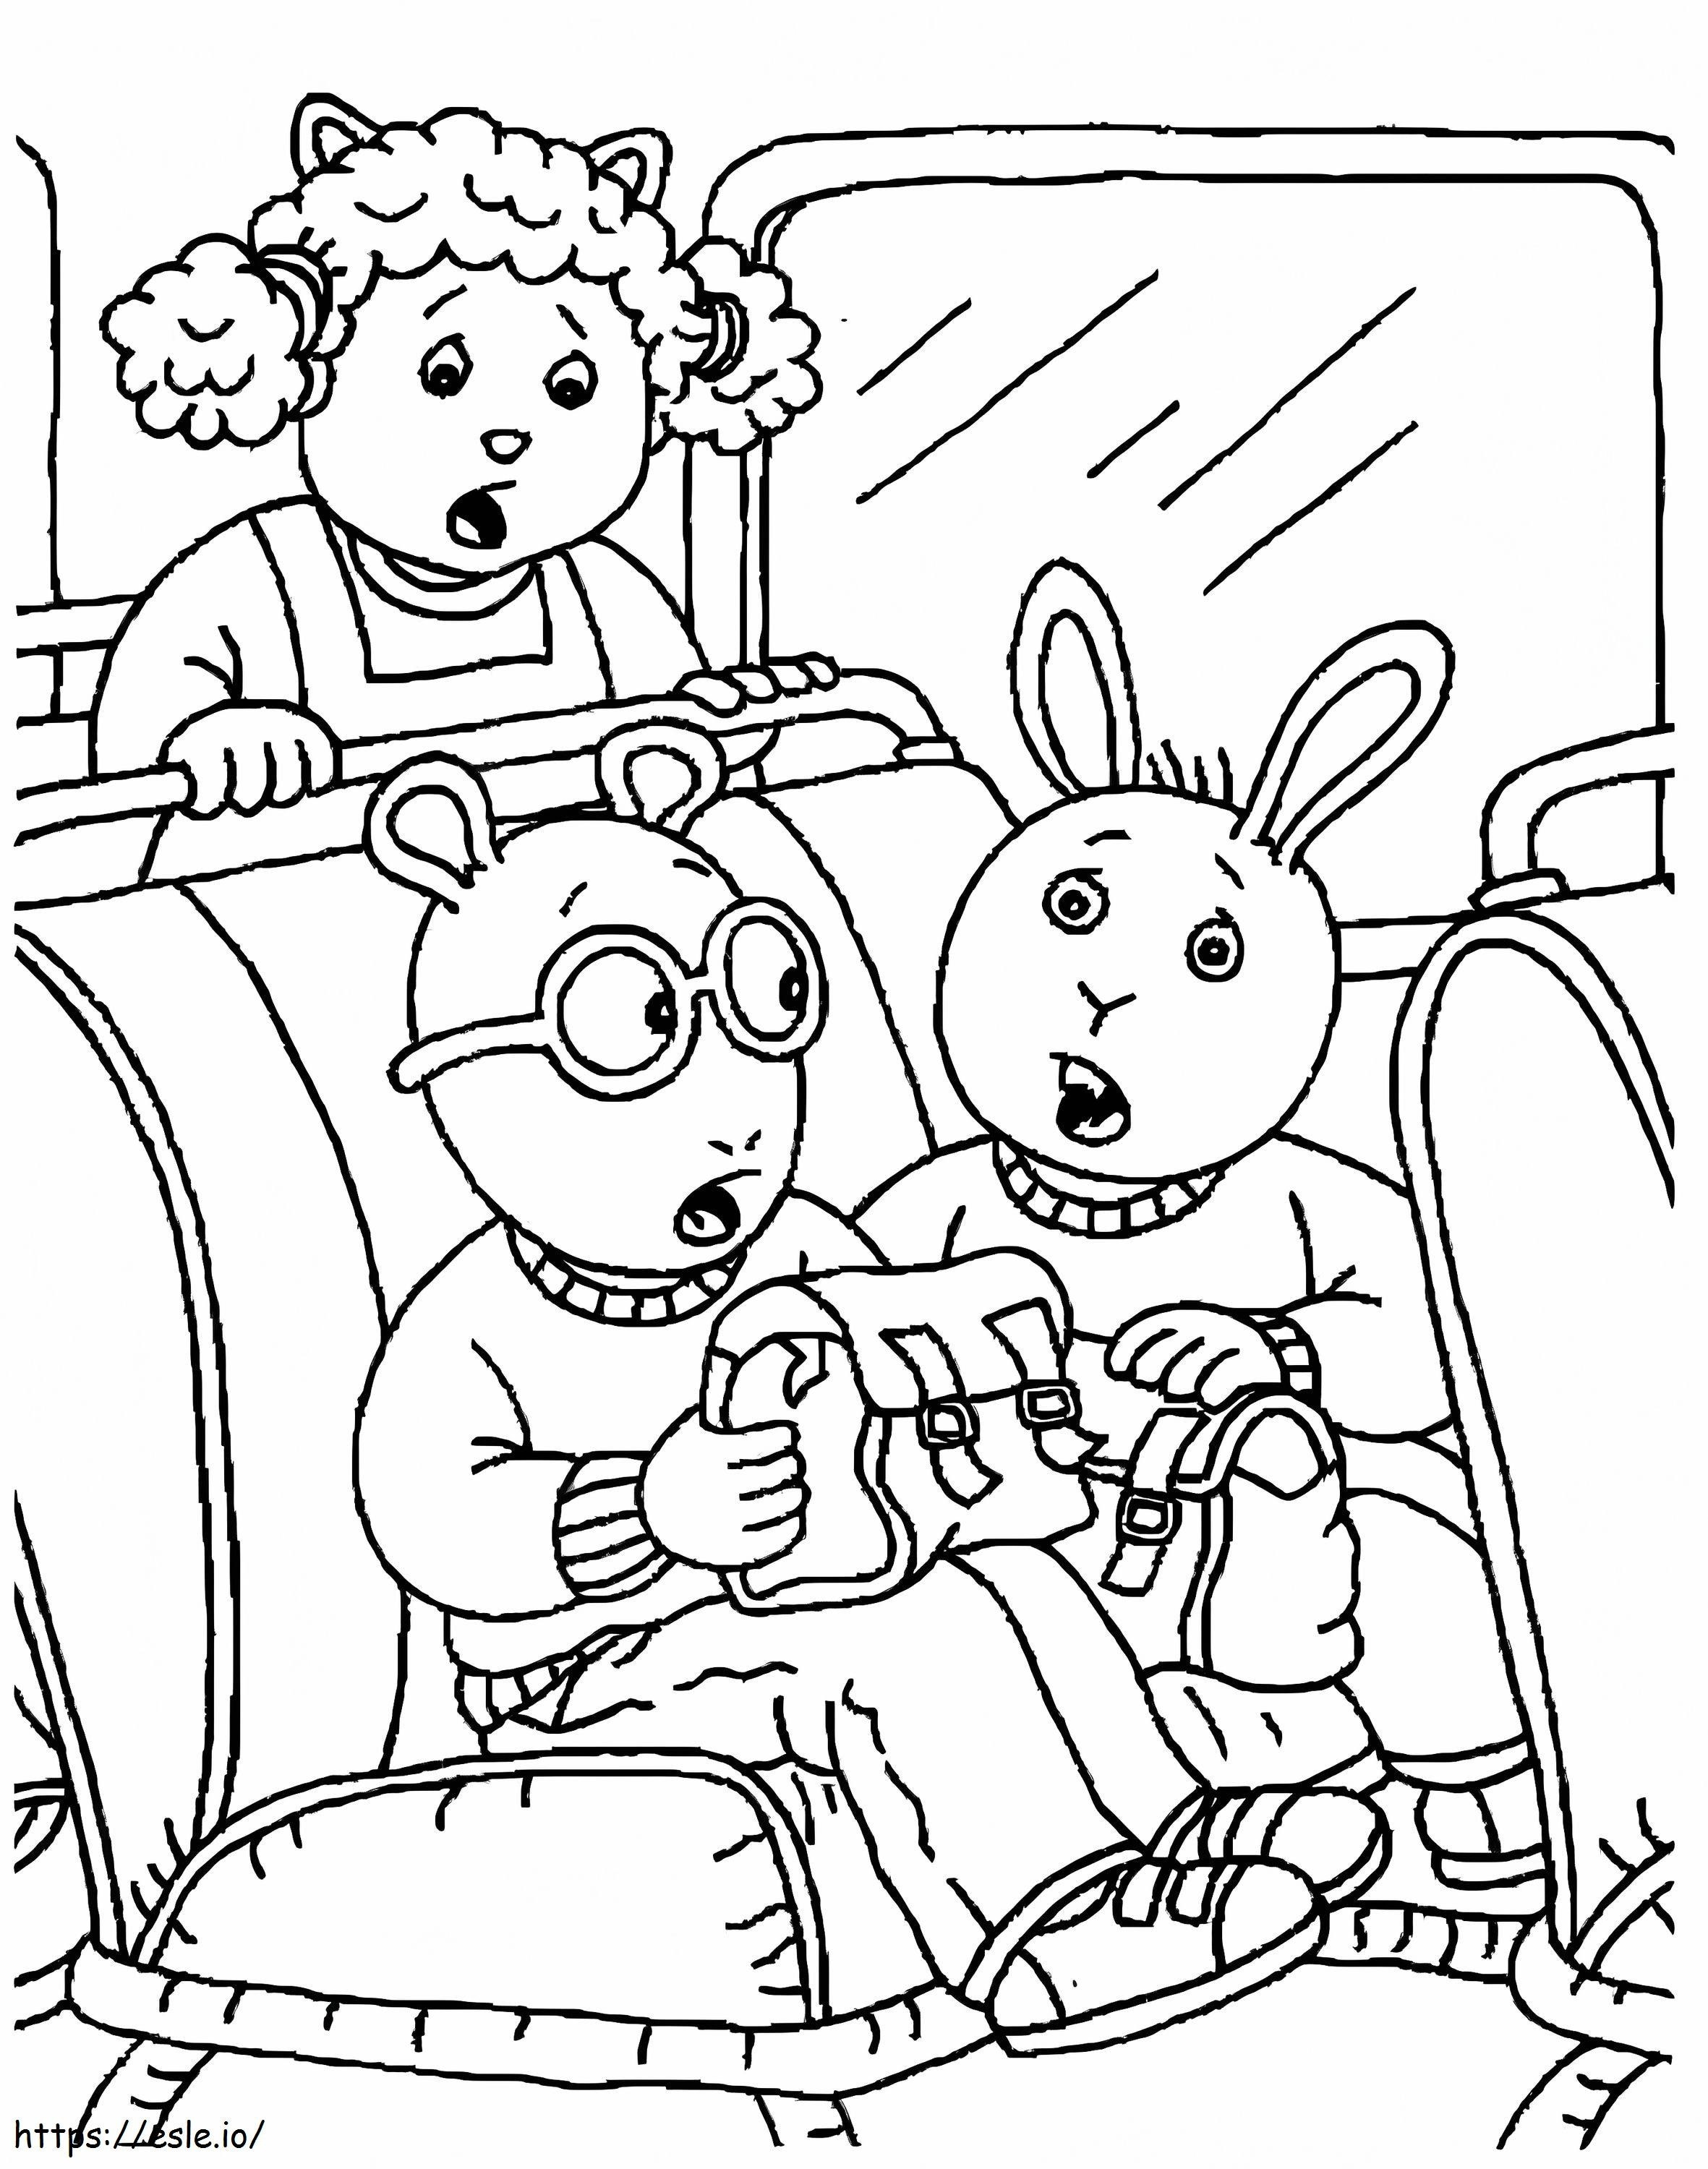 Arthur leu no ônibus para colorir